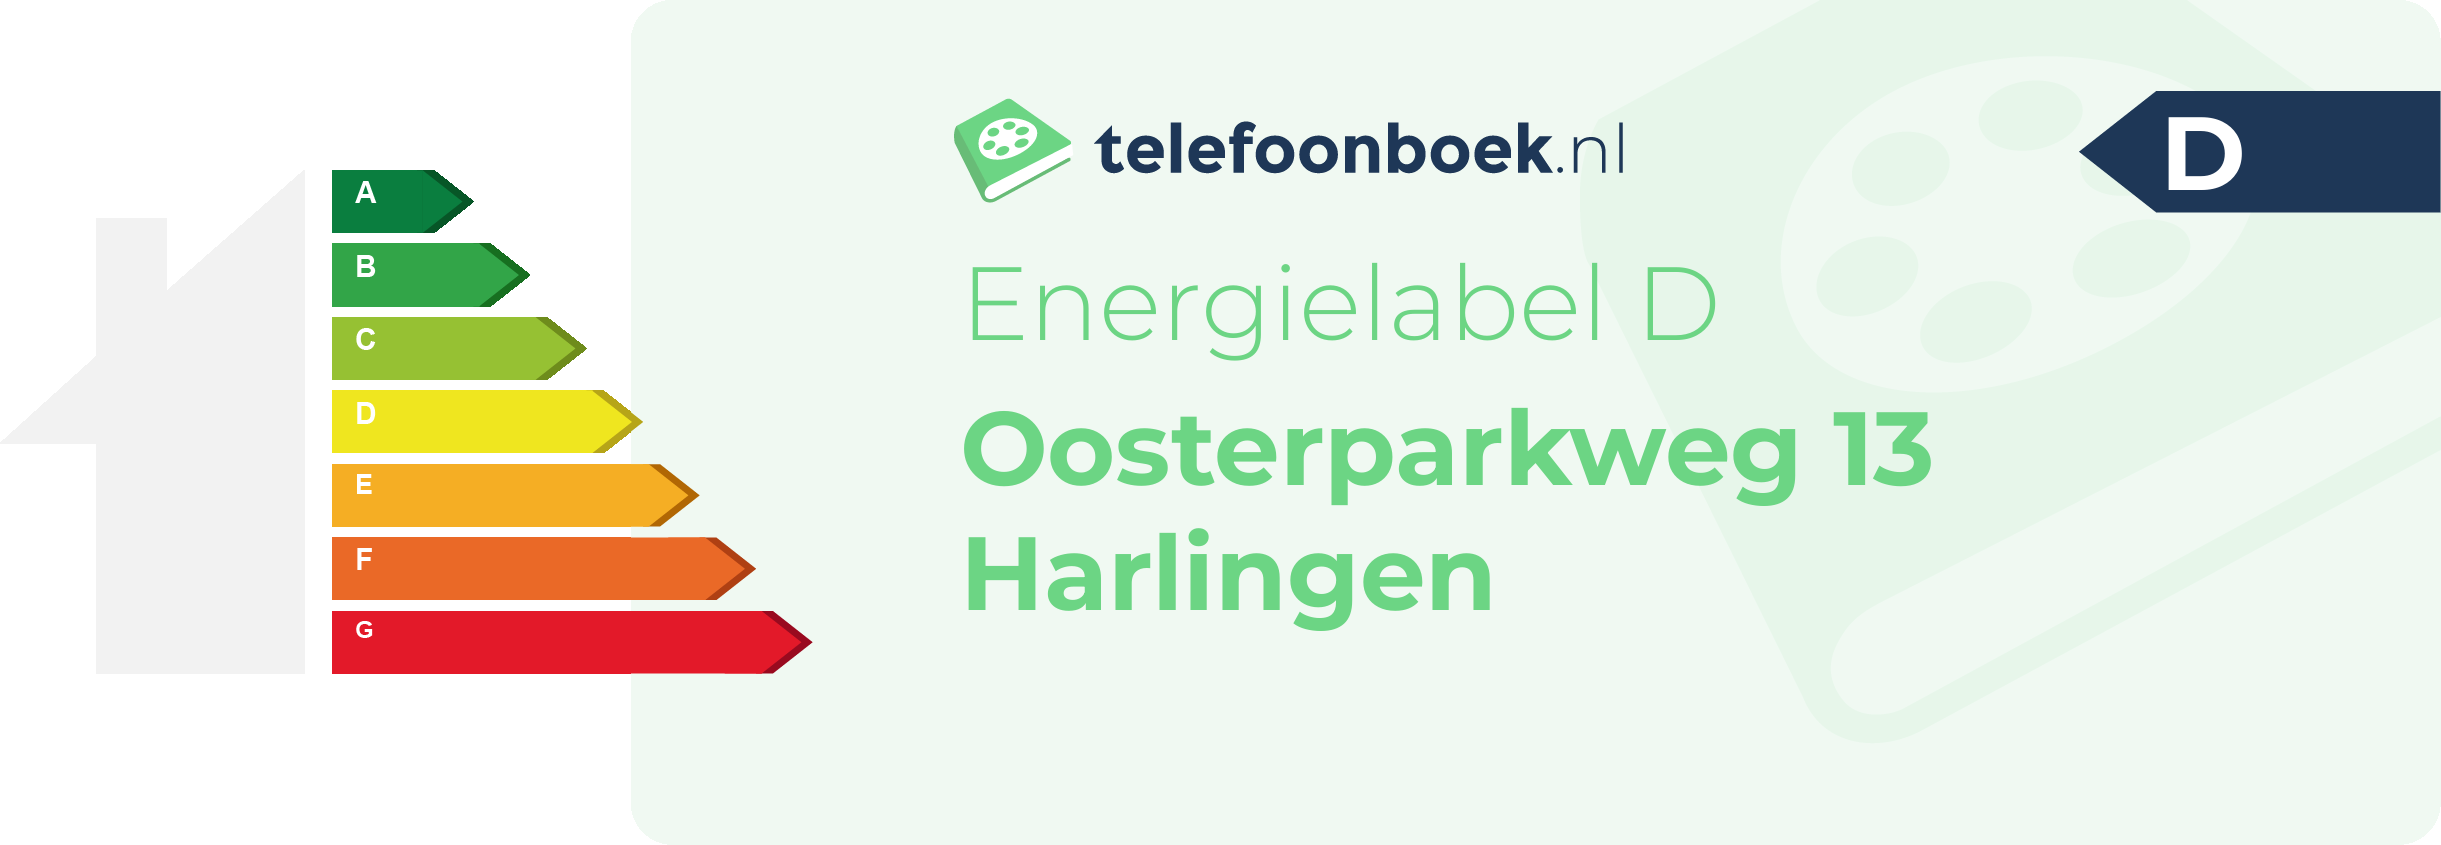 Energielabel Oosterparkweg 13 Harlingen